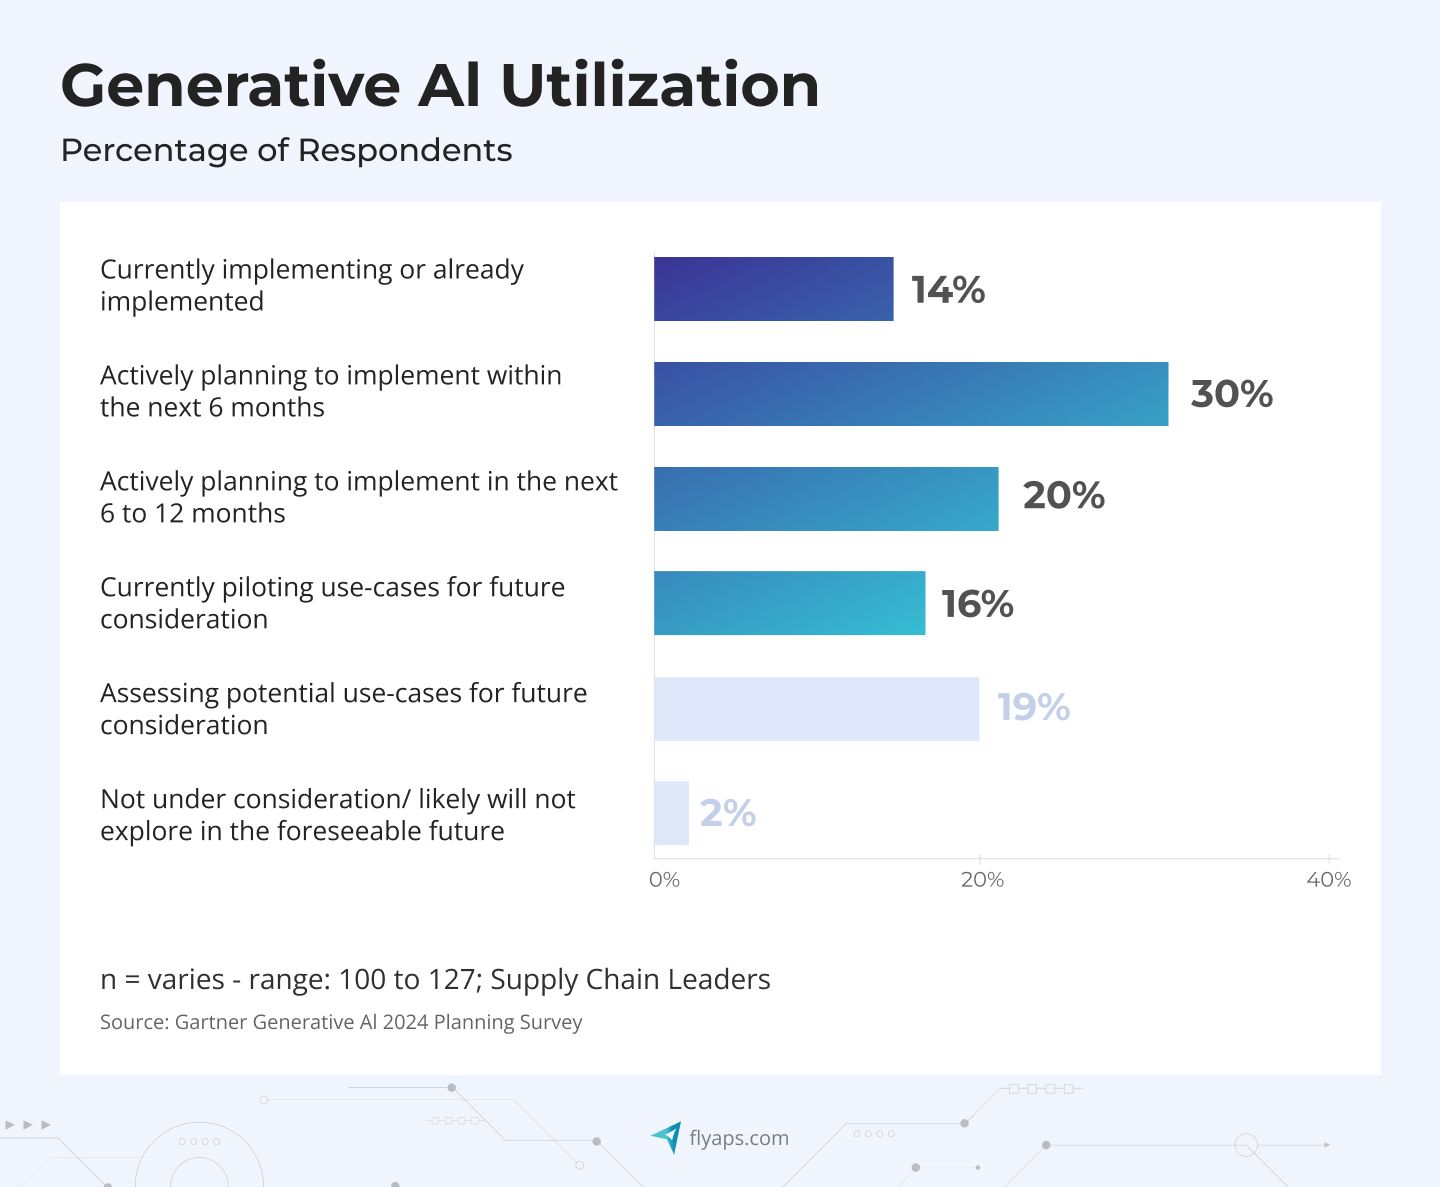 Gartner's generative AI 2024 planning survey unveils strategic utilization blueprints for supply chain leaders